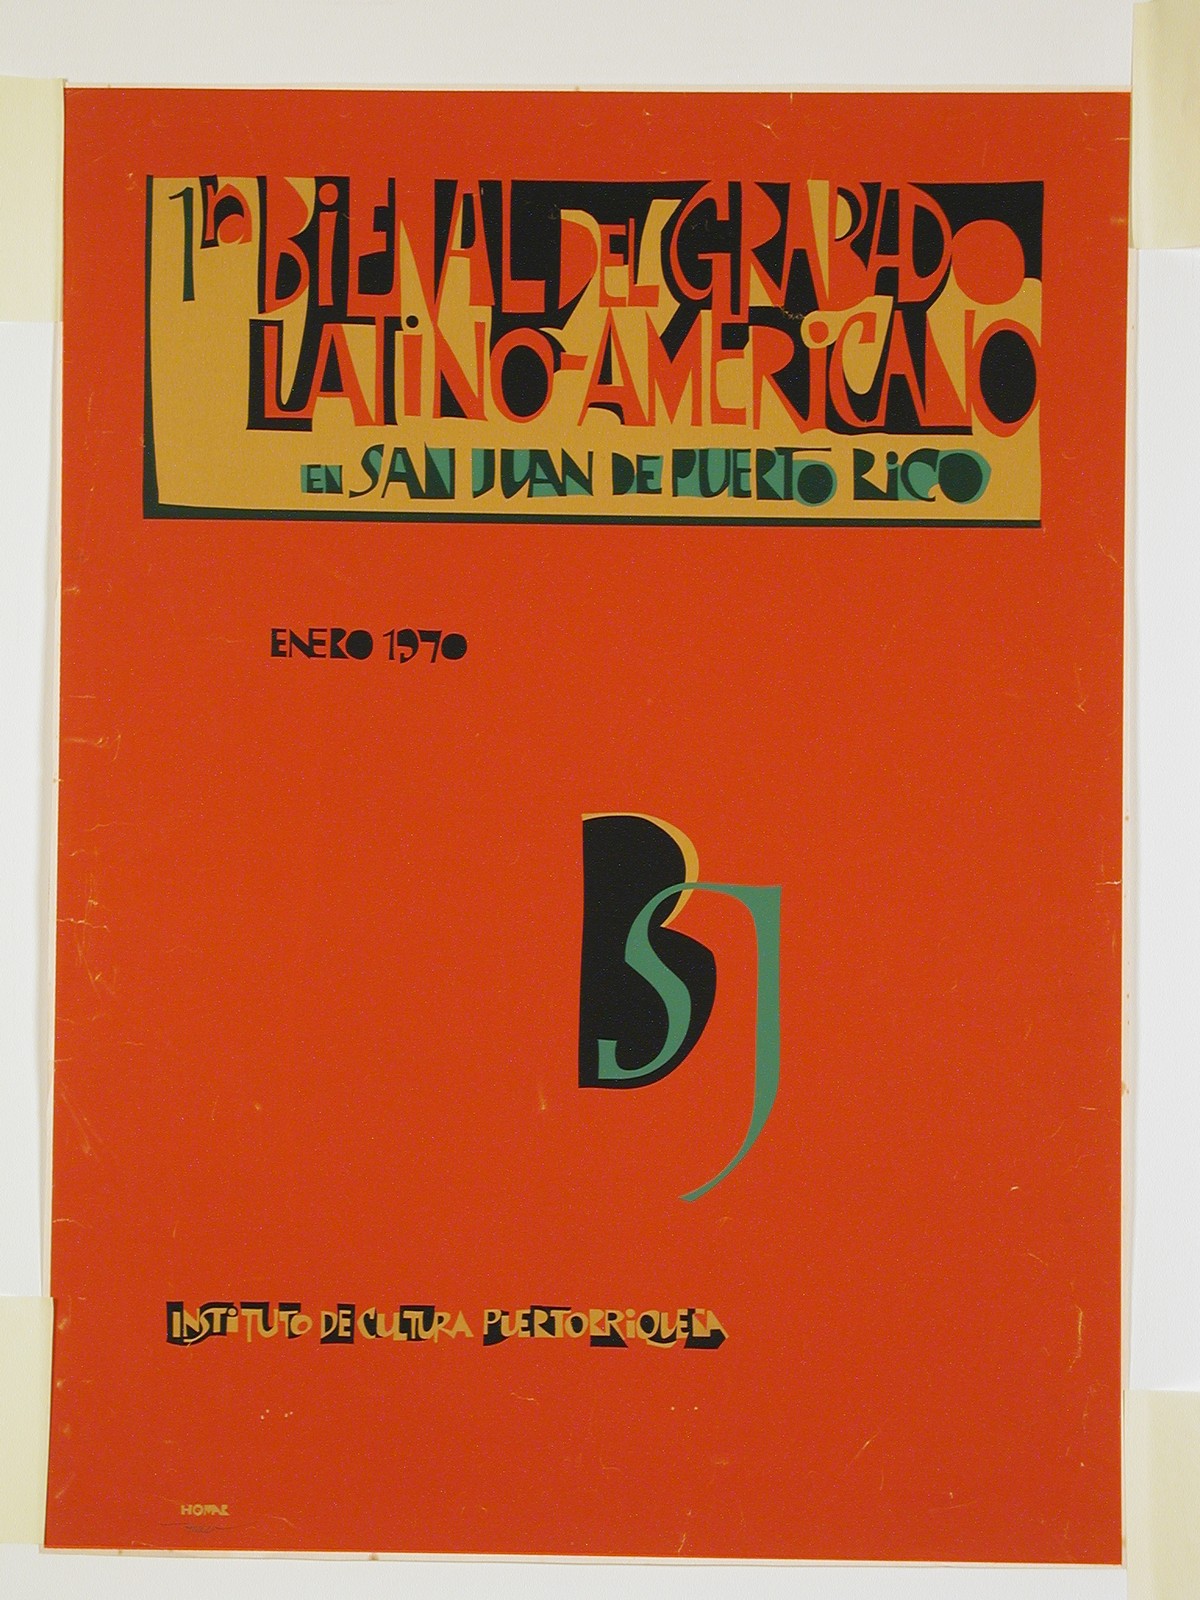 1st Biennial of Latin American Print in San Juan, Puerto Rico